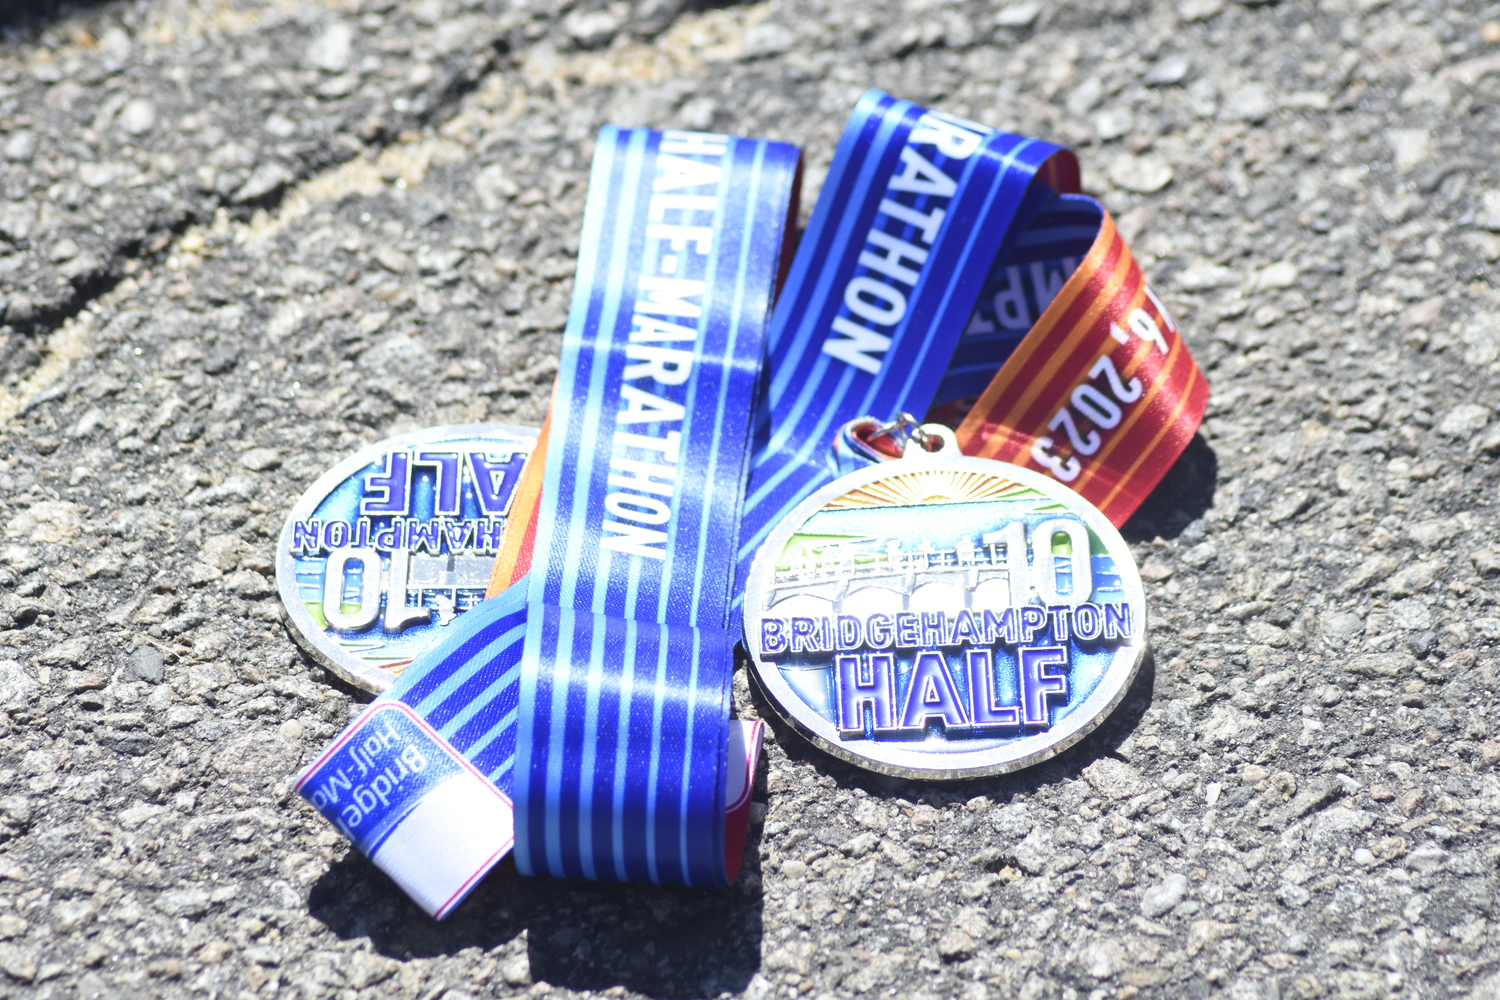 Bridgehampton Half Marathon medals.   DREW BUDD